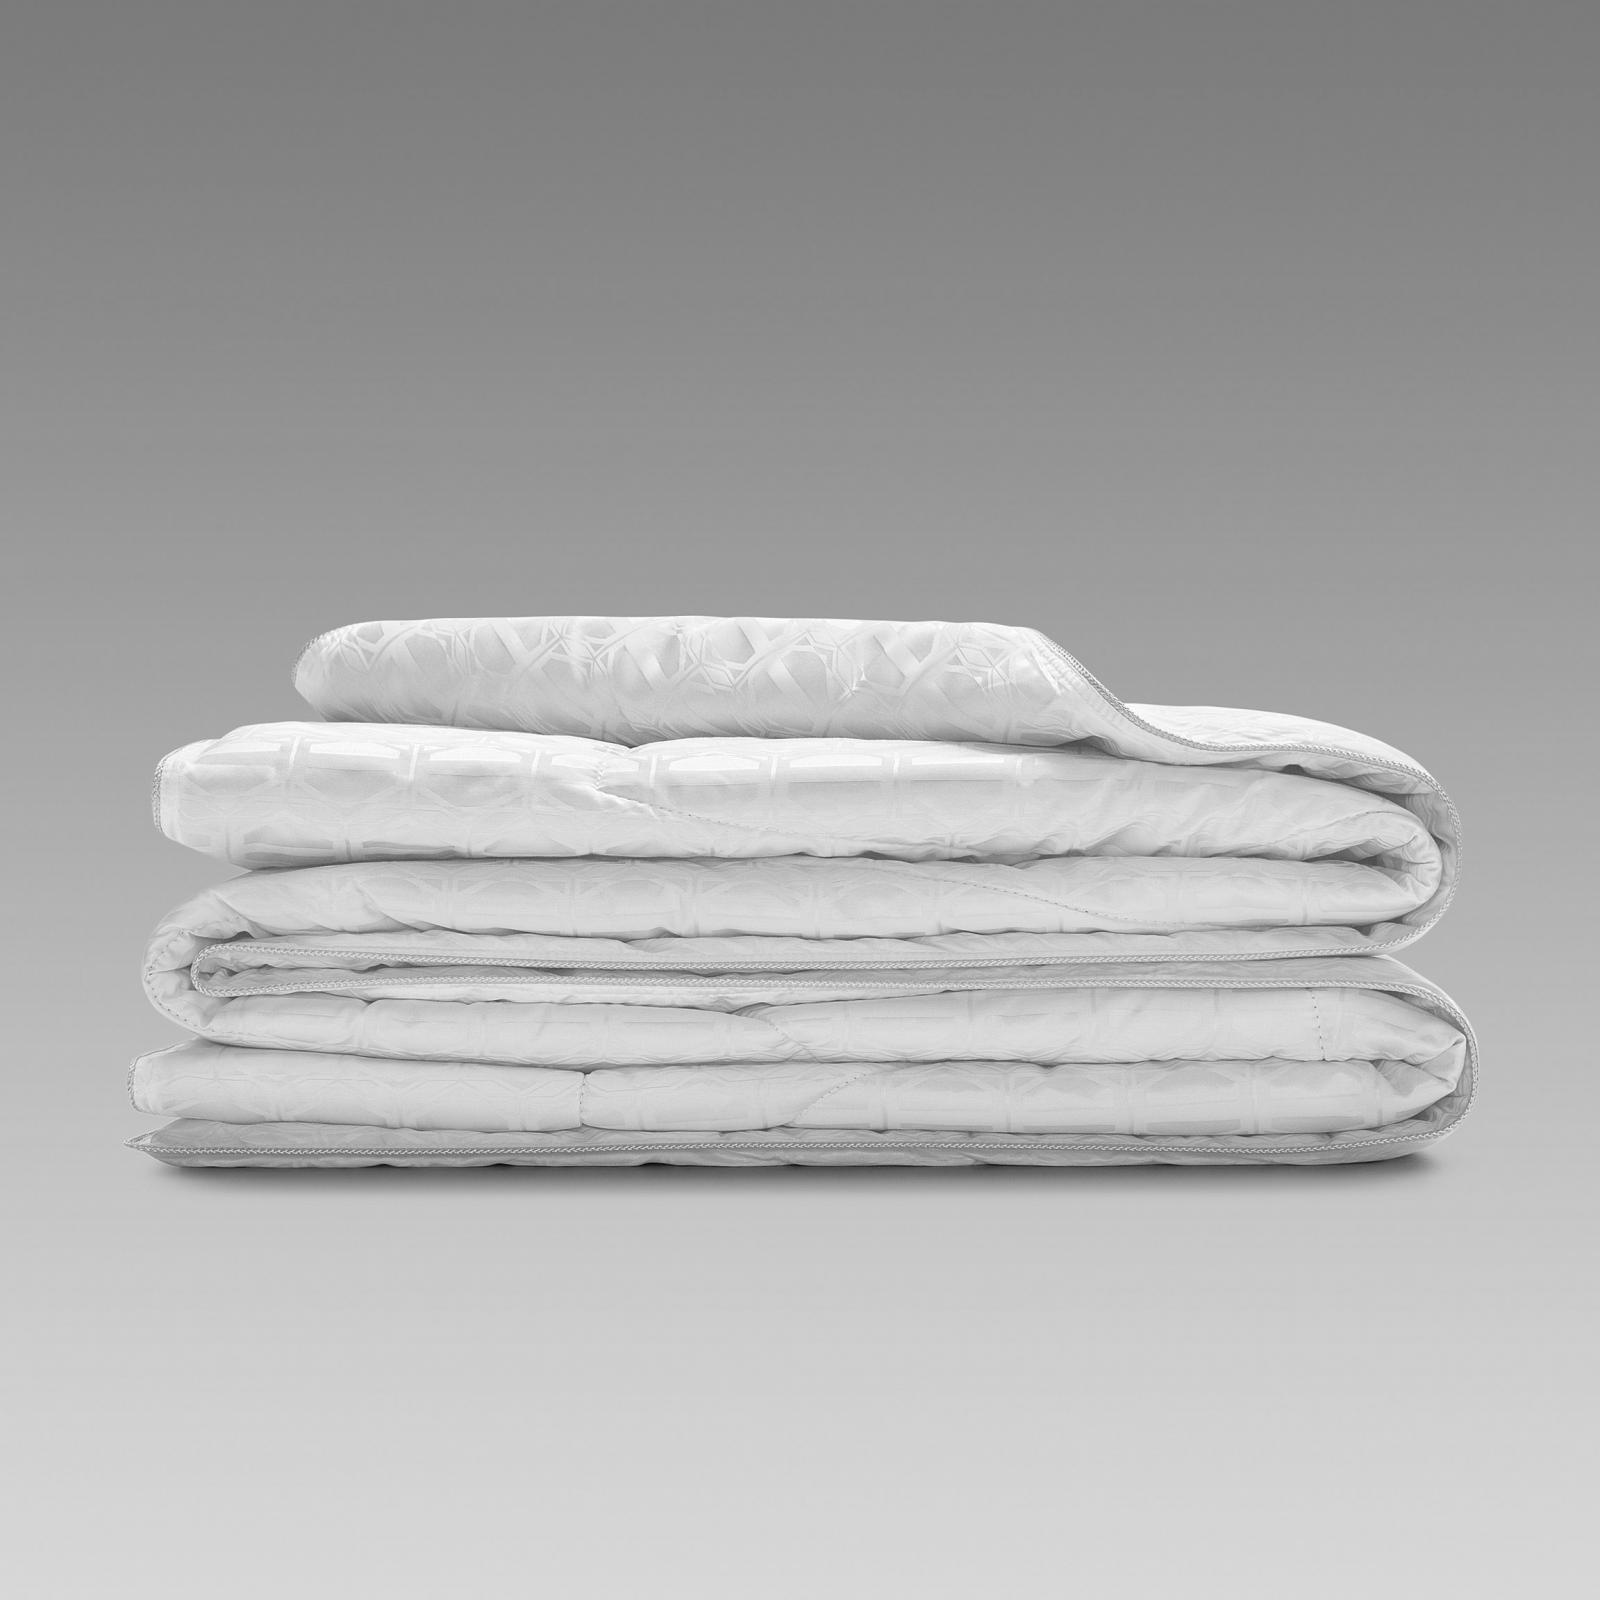 Одеяло Виенто Togas 200х210, размер 200х210 см - фото 5